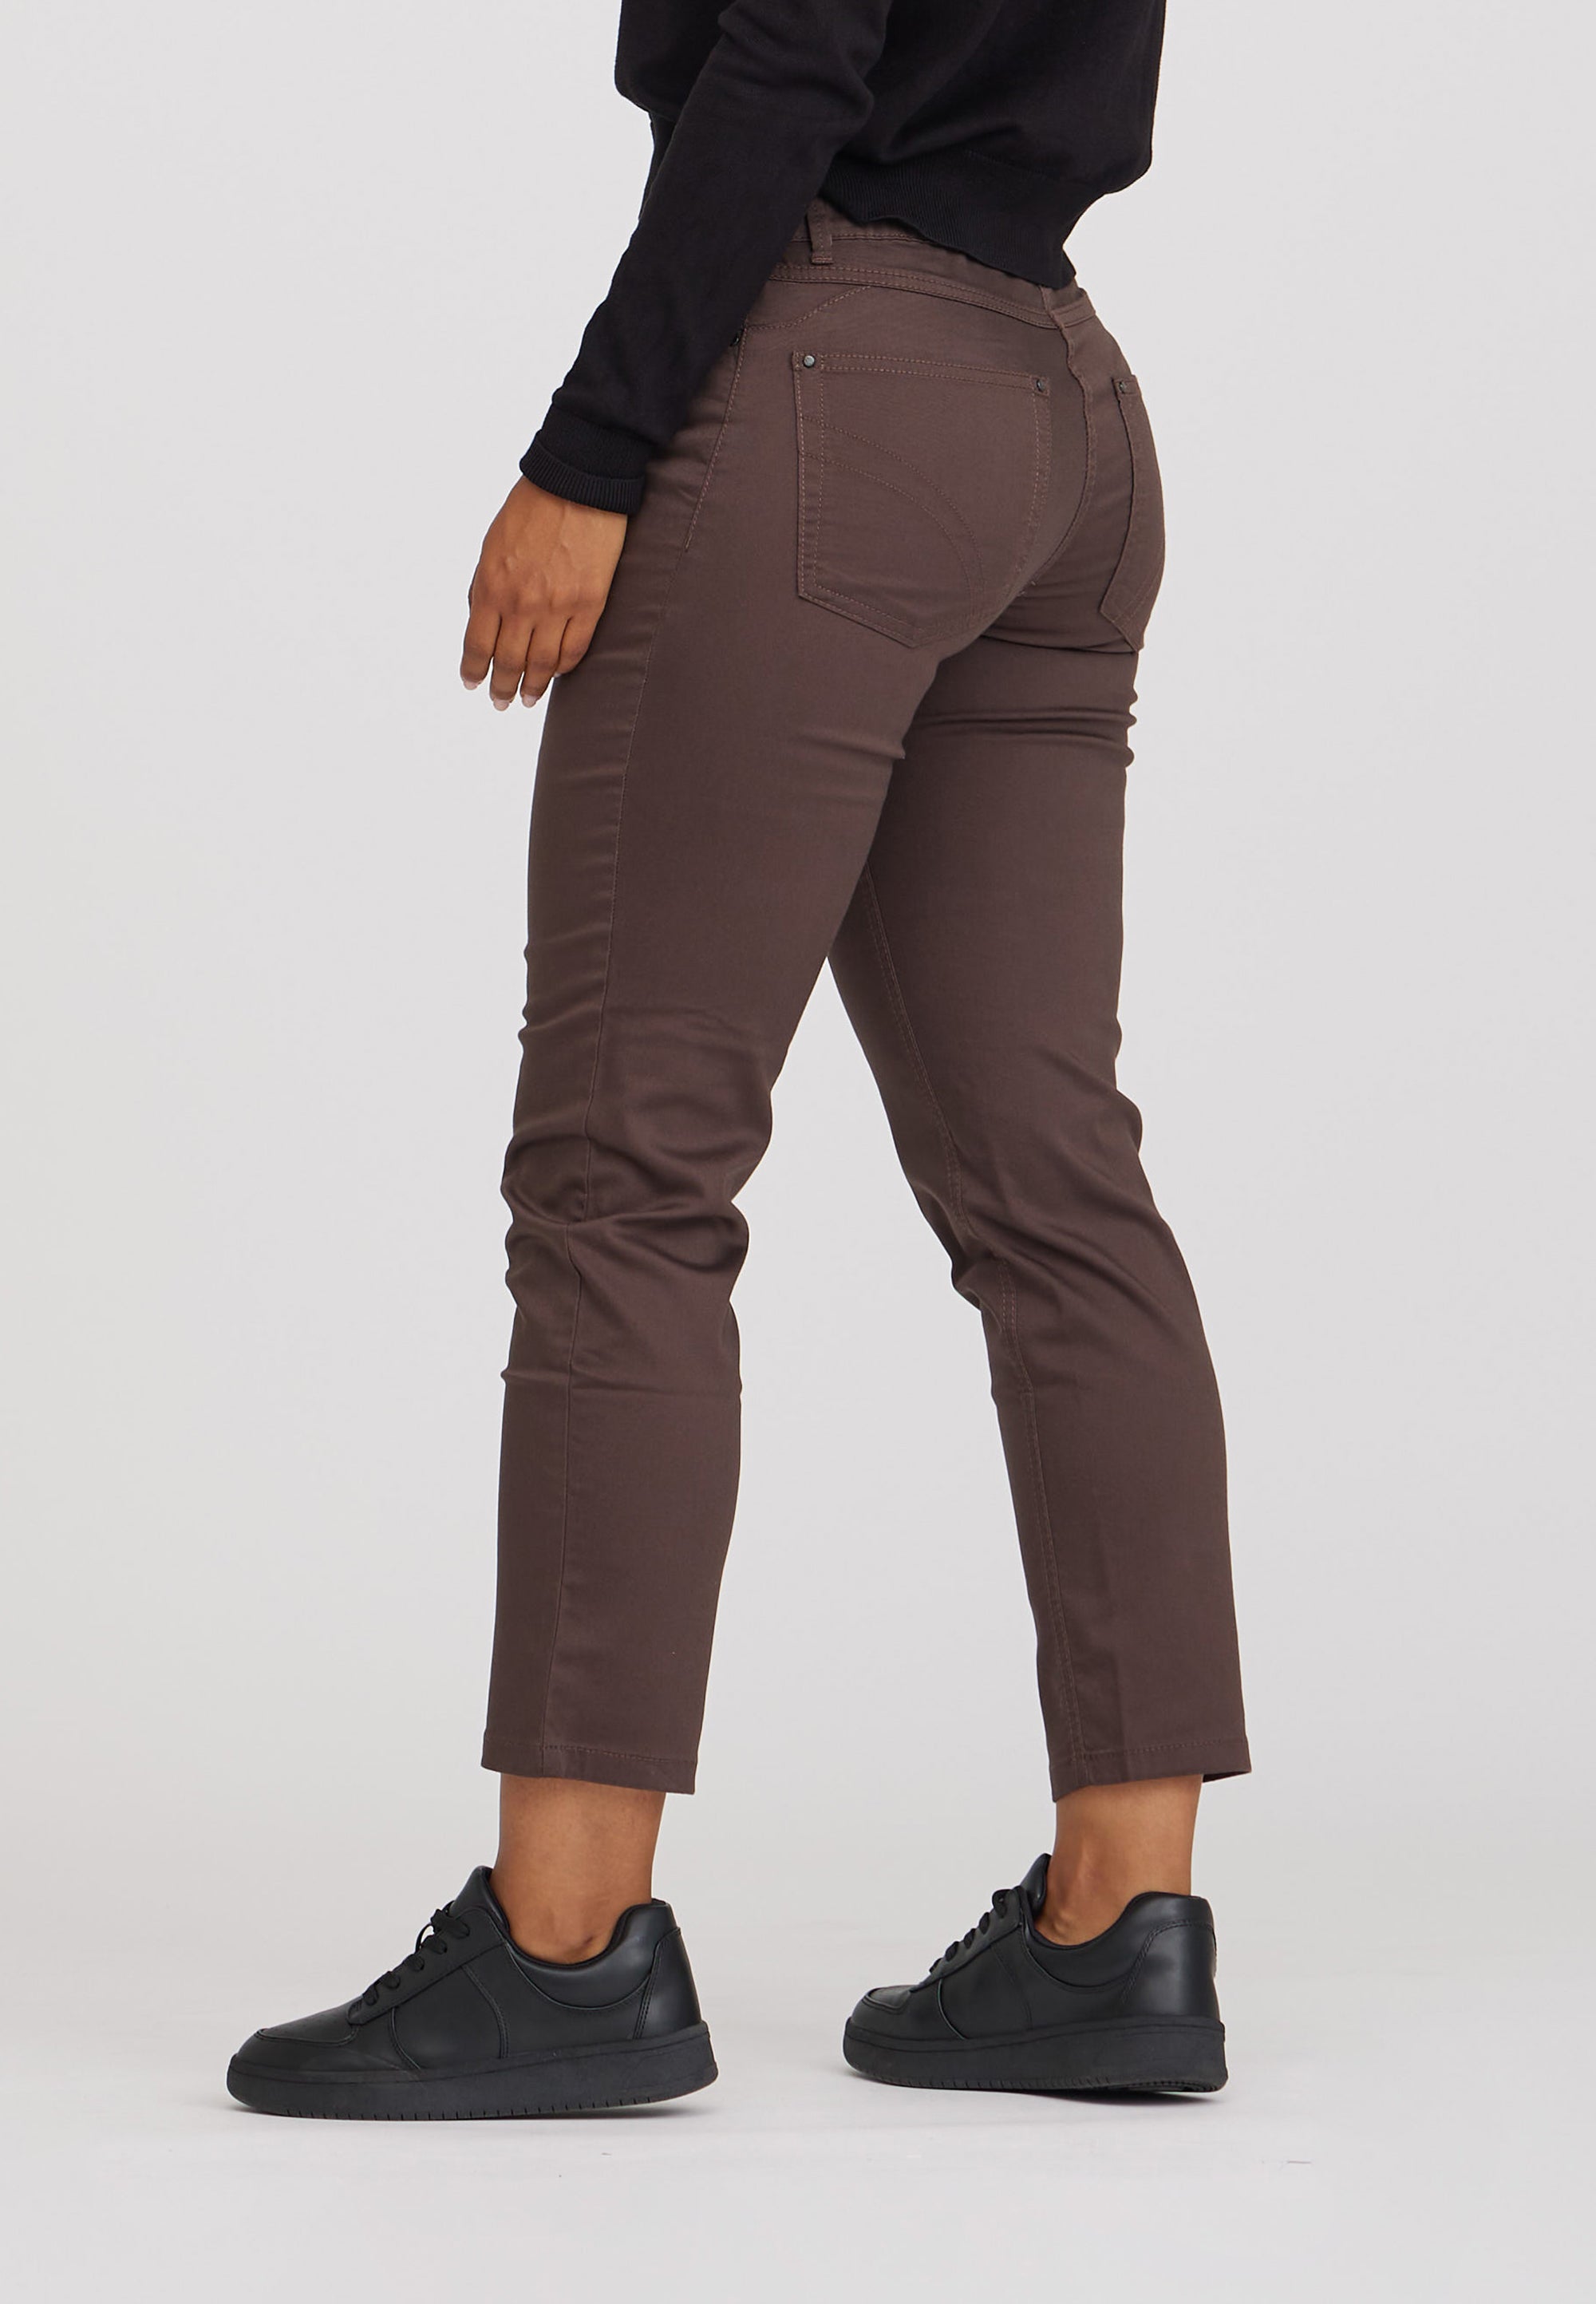 LAURIE Hannah Regular - Extra Short Length Trousers REGULAR 88000 Brown